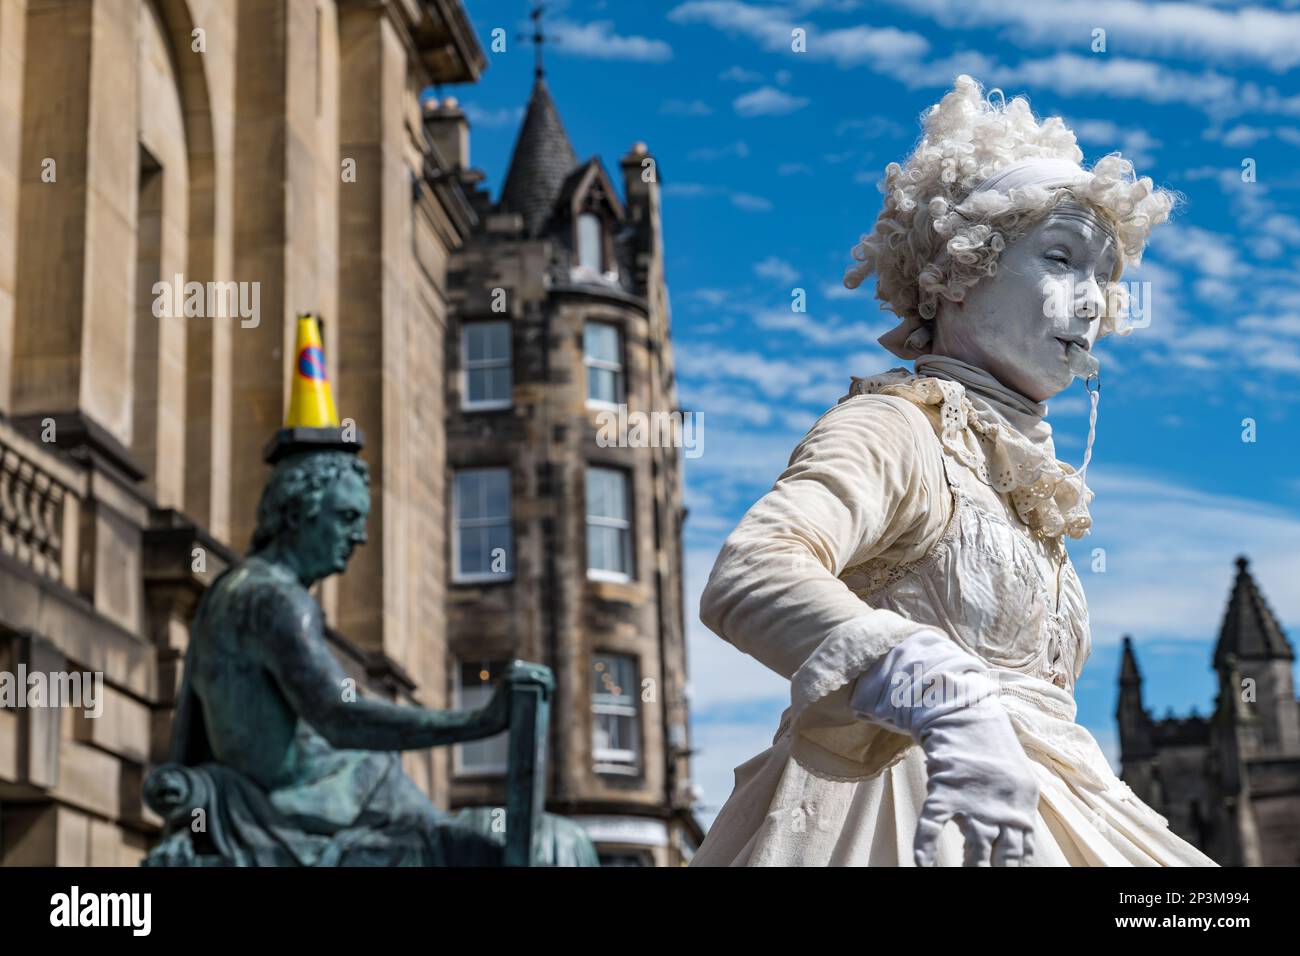 Living statue street performer woman dressed in white by David Hume statue, Royal Mile, Edinburgh, Scotland, UK Stock Photo